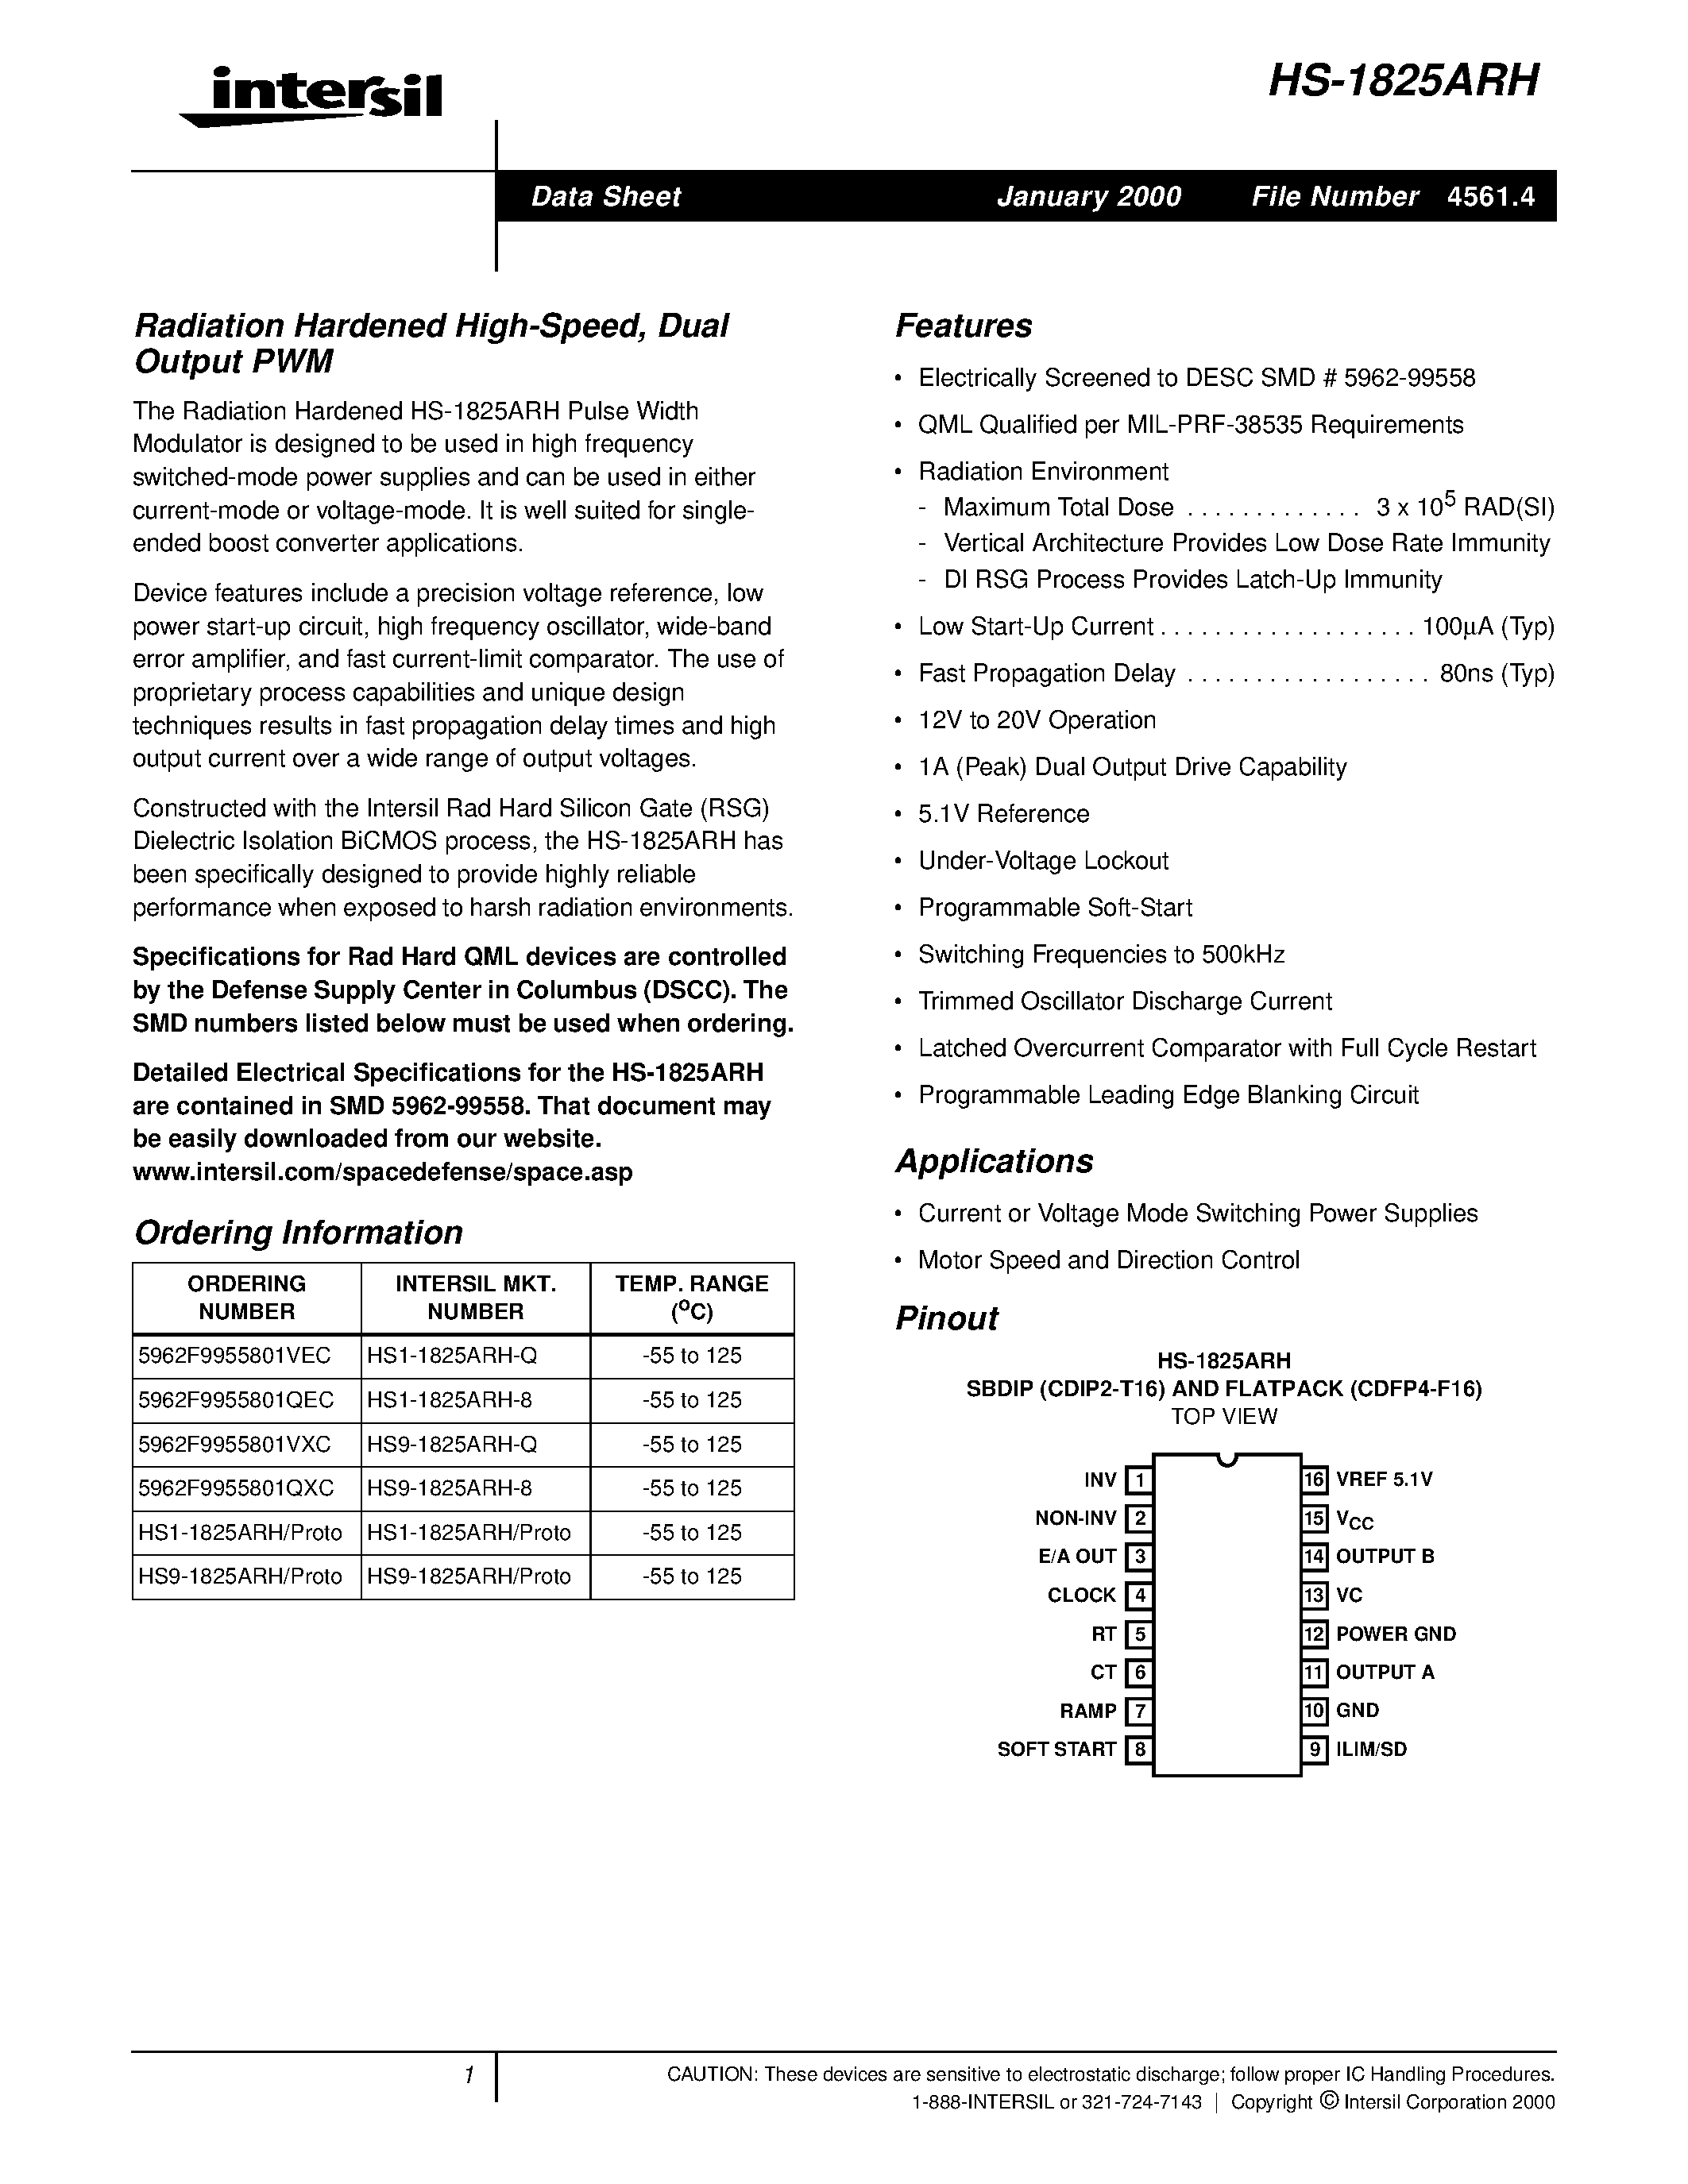 Datasheet HS1-1825ARH-Q - Radiation Hardened High-Speed/ Dual Output PWM page 1